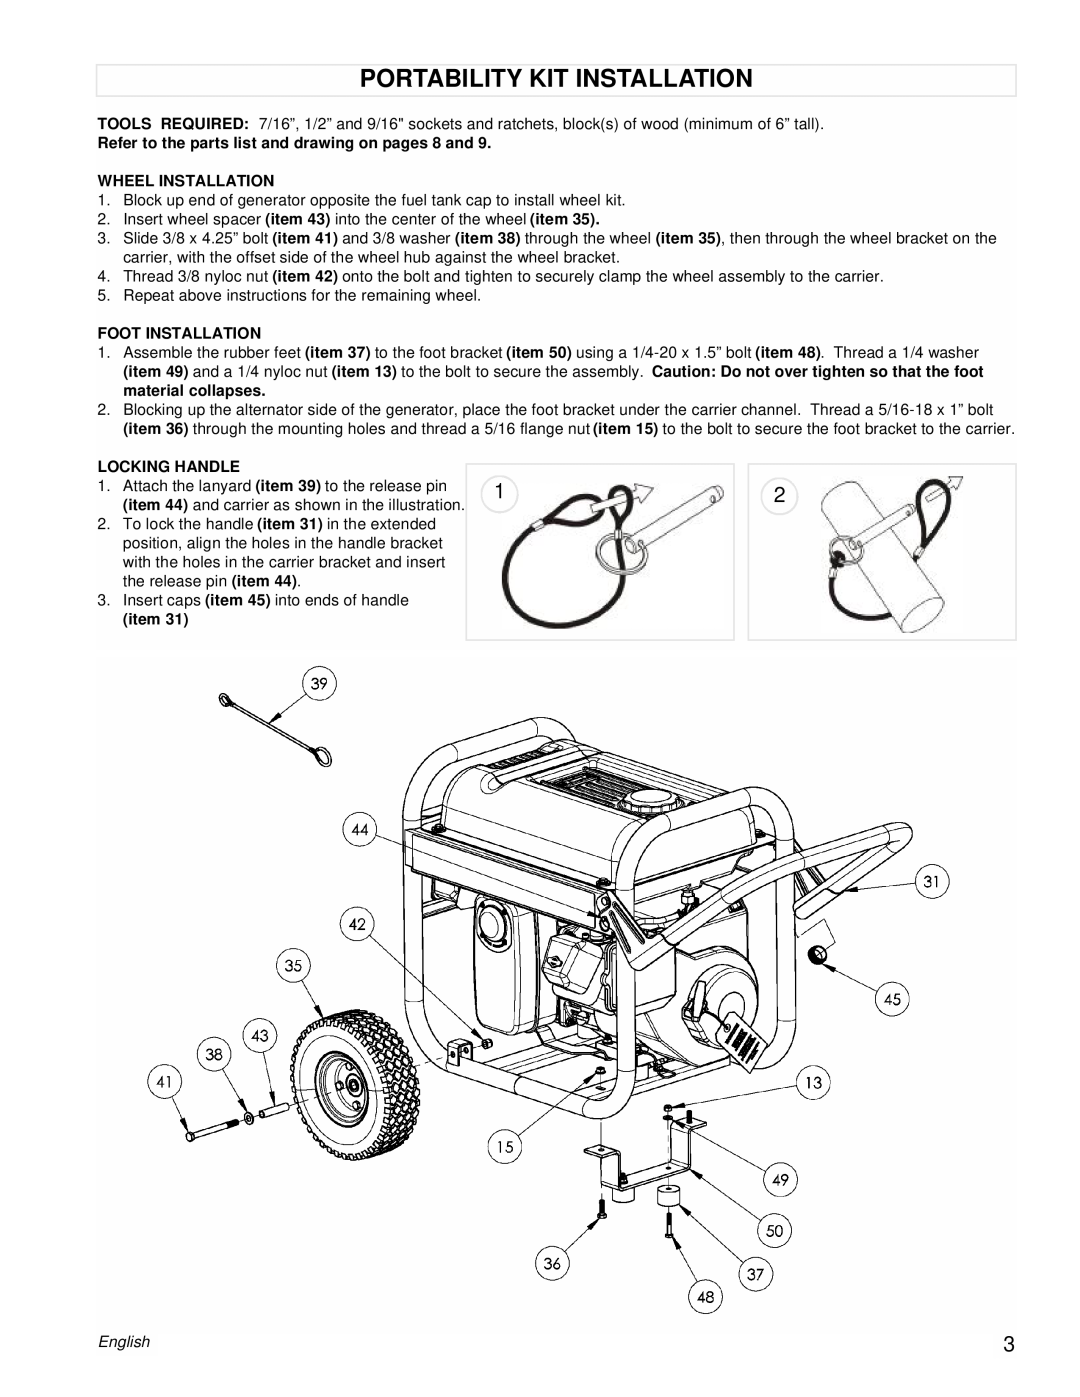 Powermate PMC543250 manual Portability Kit Installation, Wheel Installation, Foot Installation, Locking Handle, English 